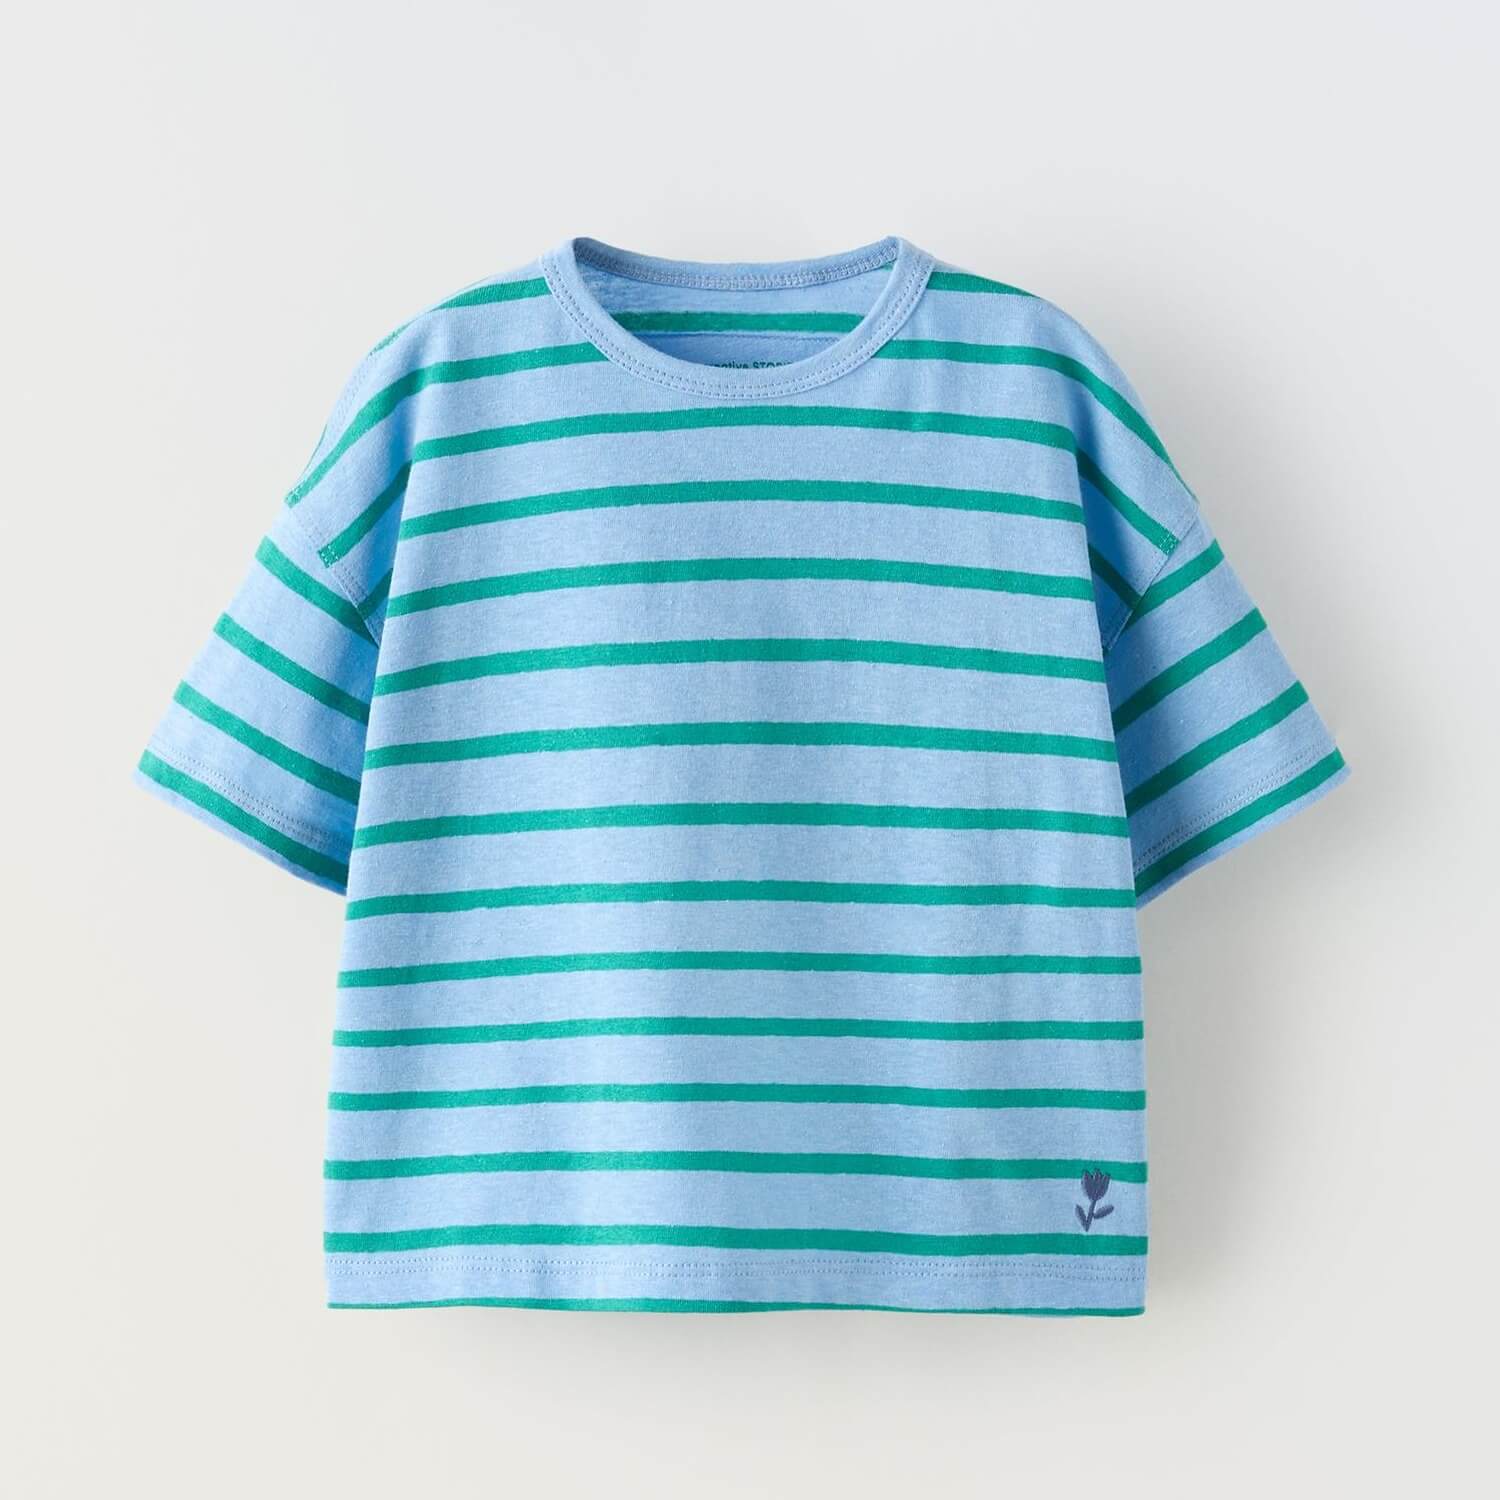 Футболка Zara Woven Striped With Embroidery, голубой/зеленый